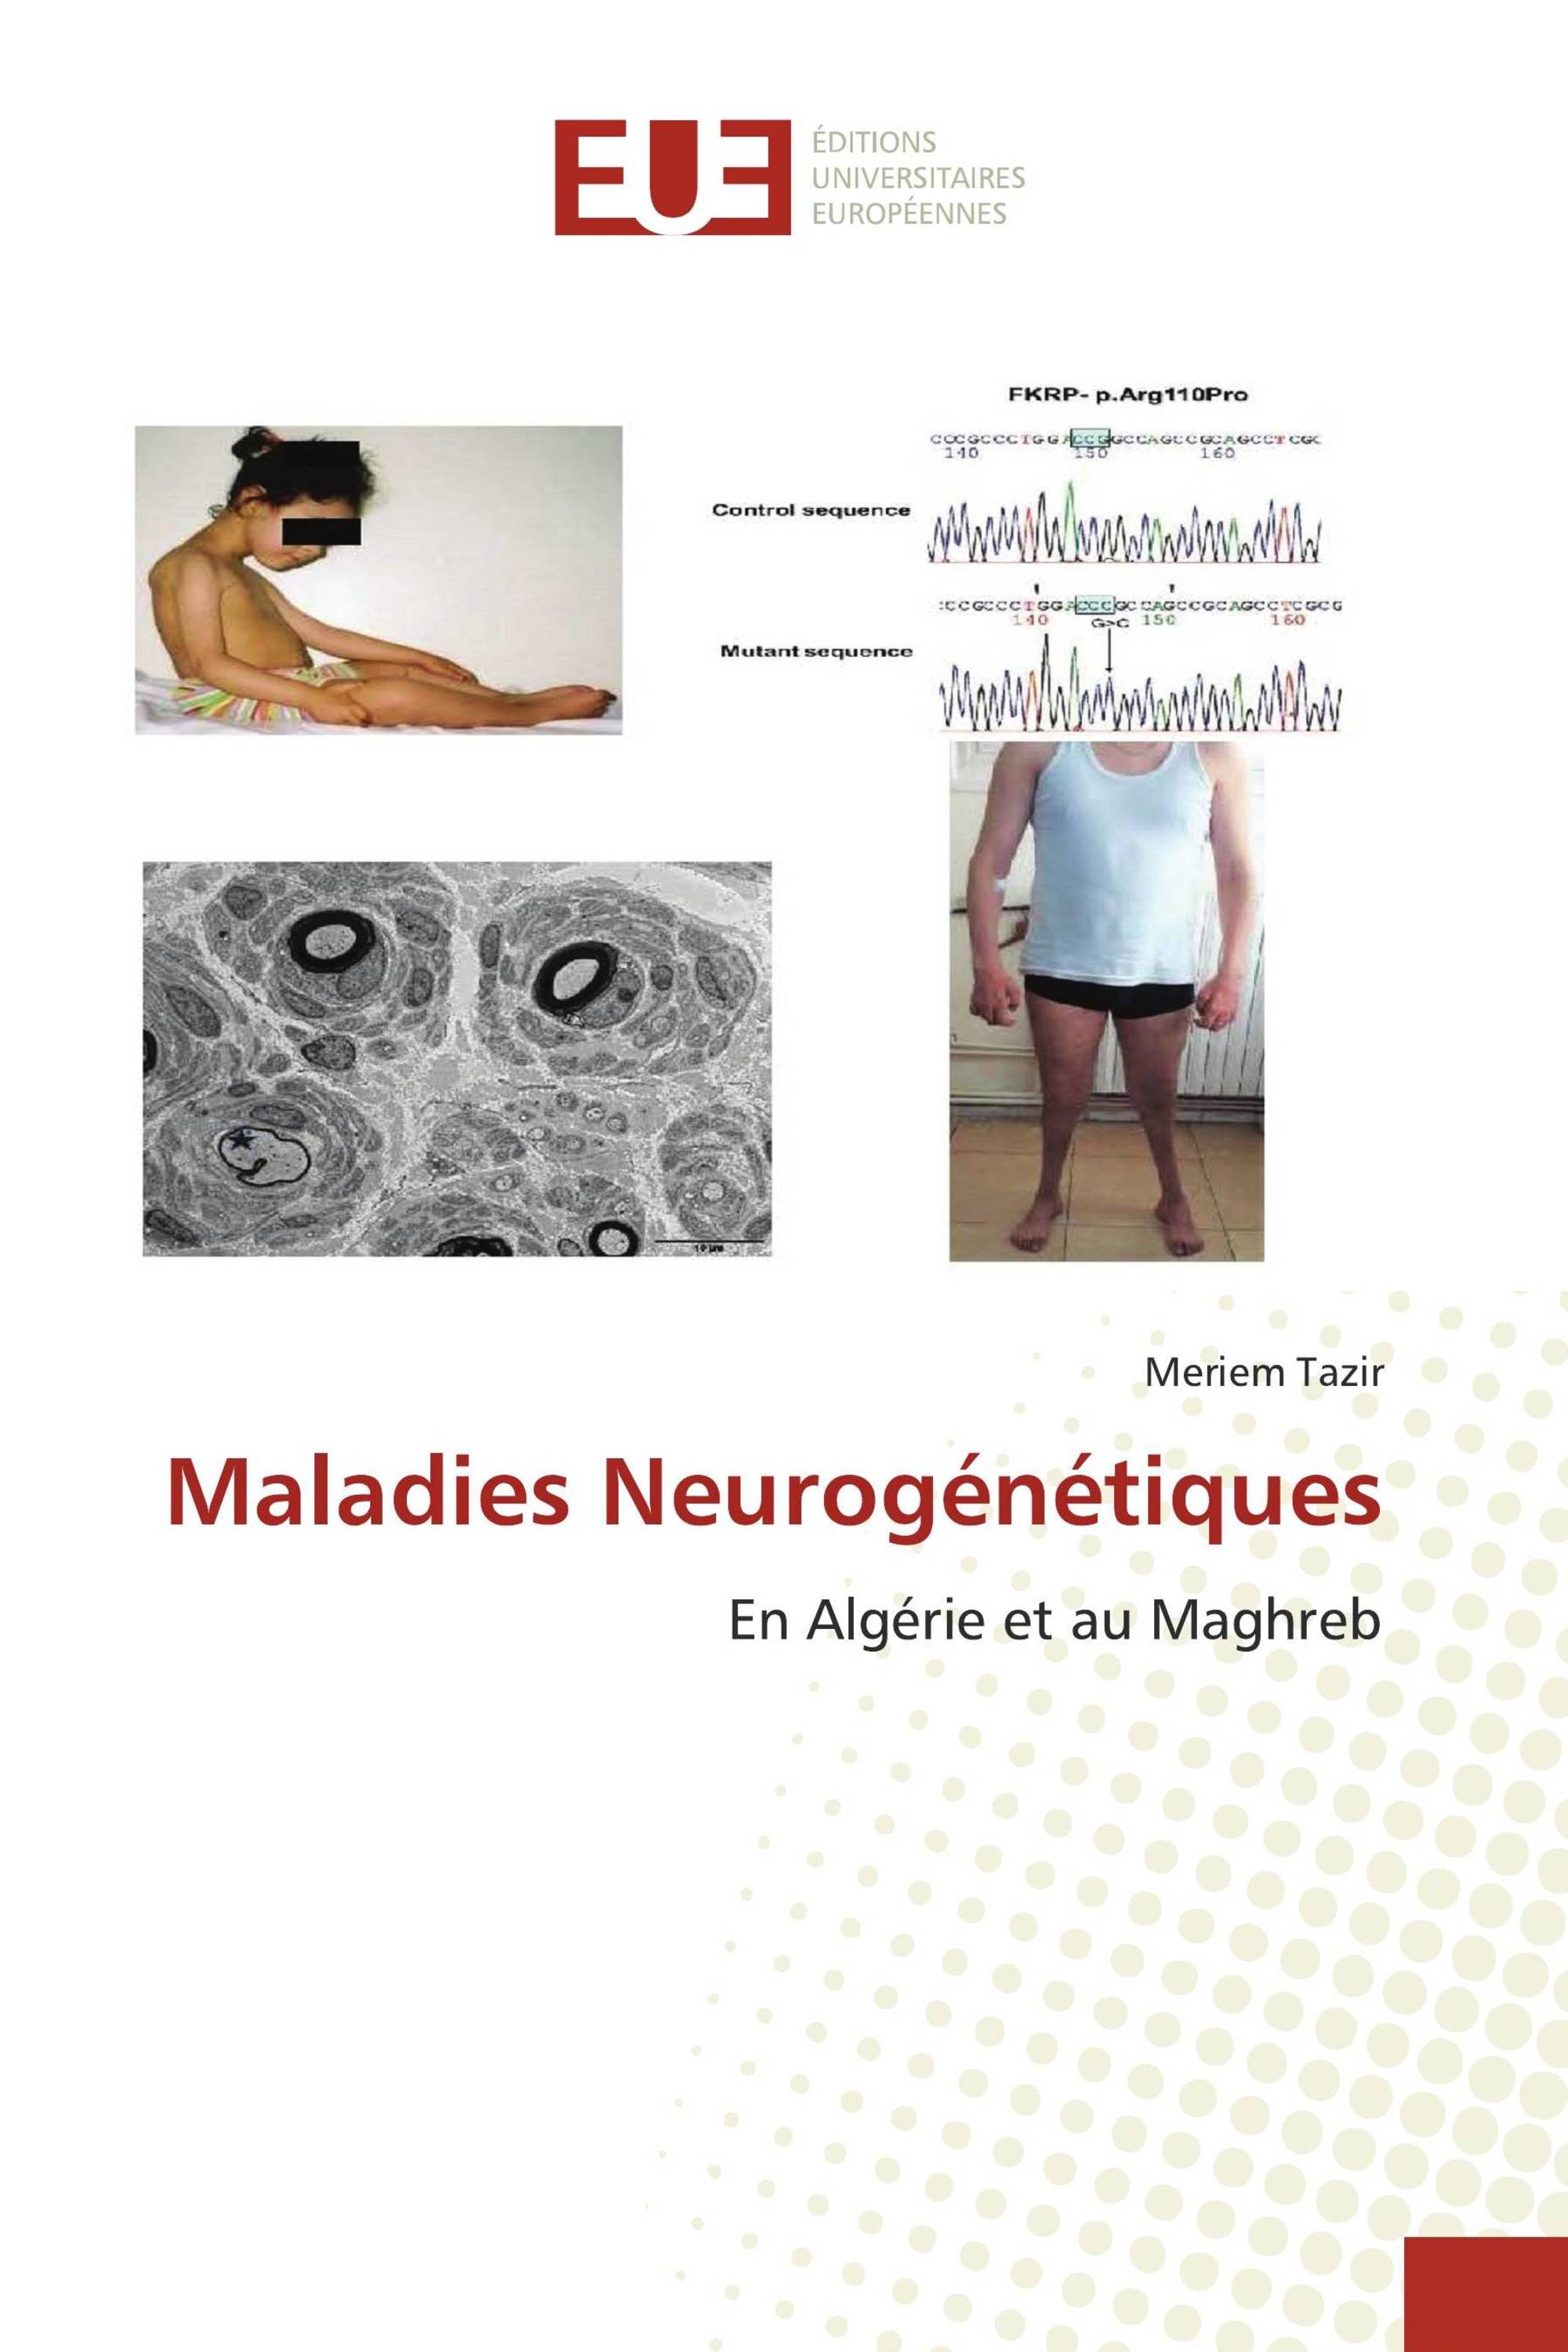 Maladies Neurogénétiques